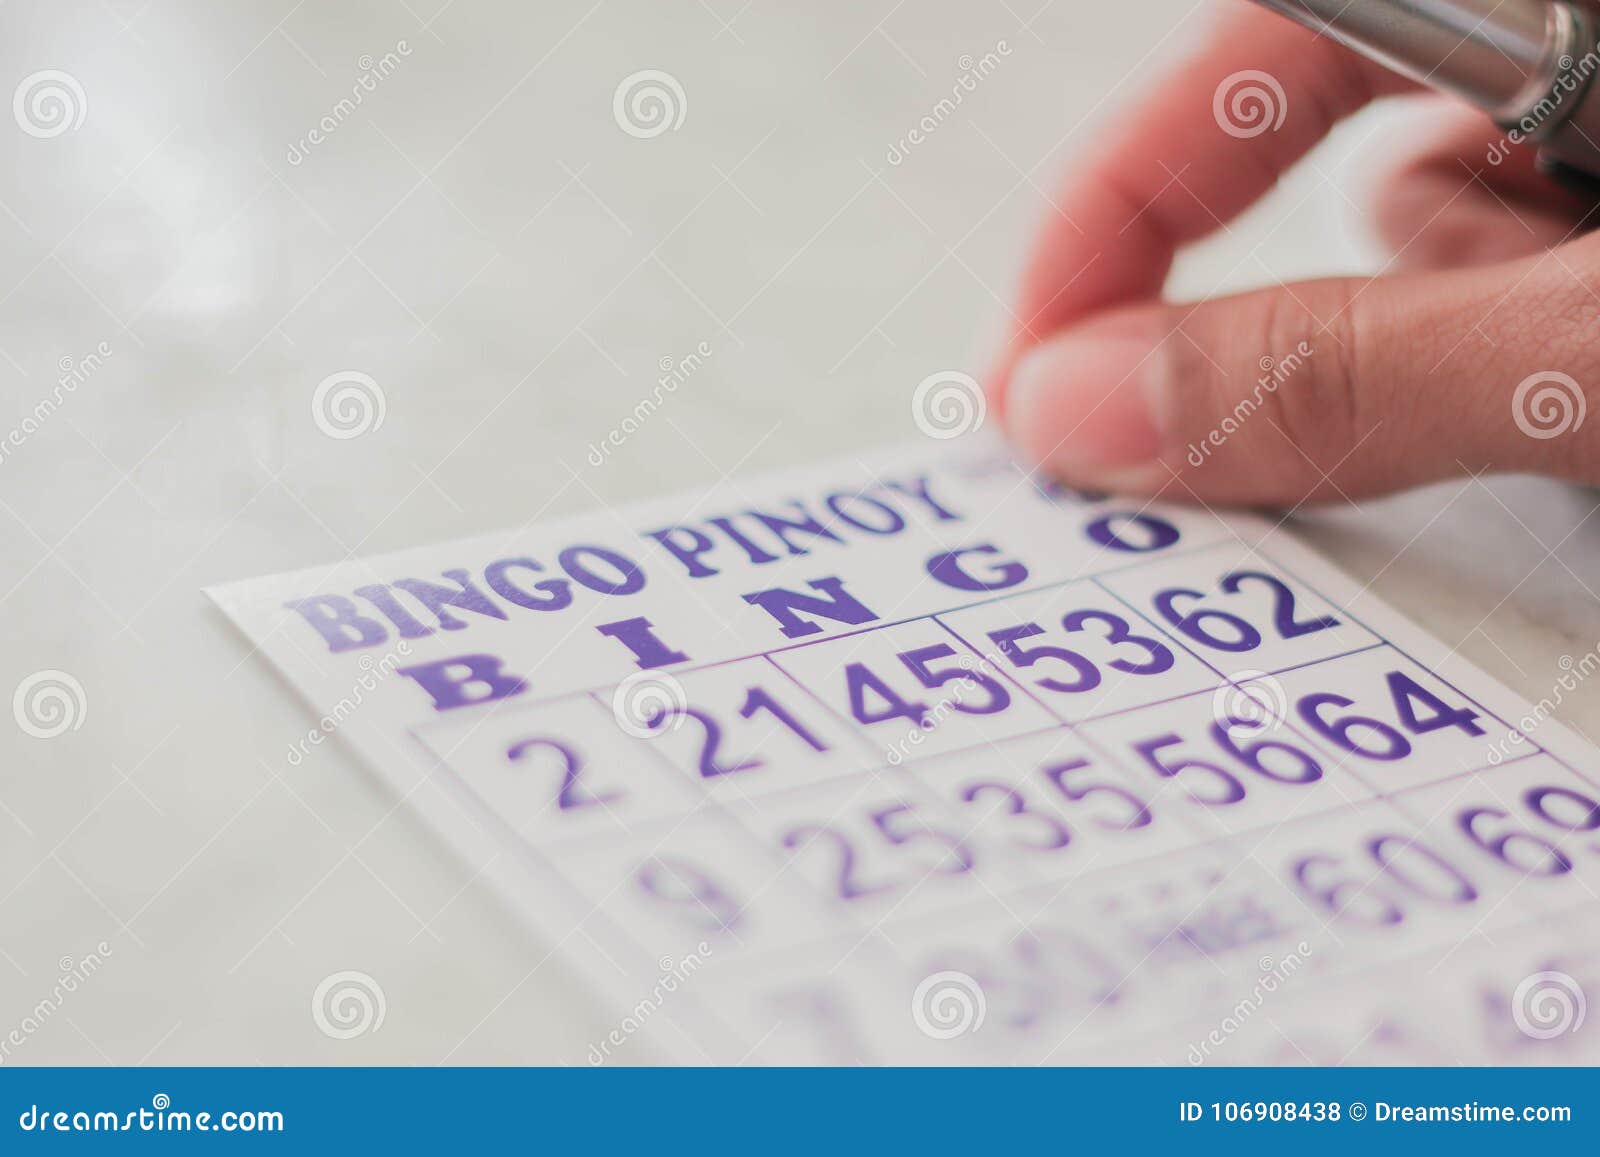 bingo online gratis senza deposito